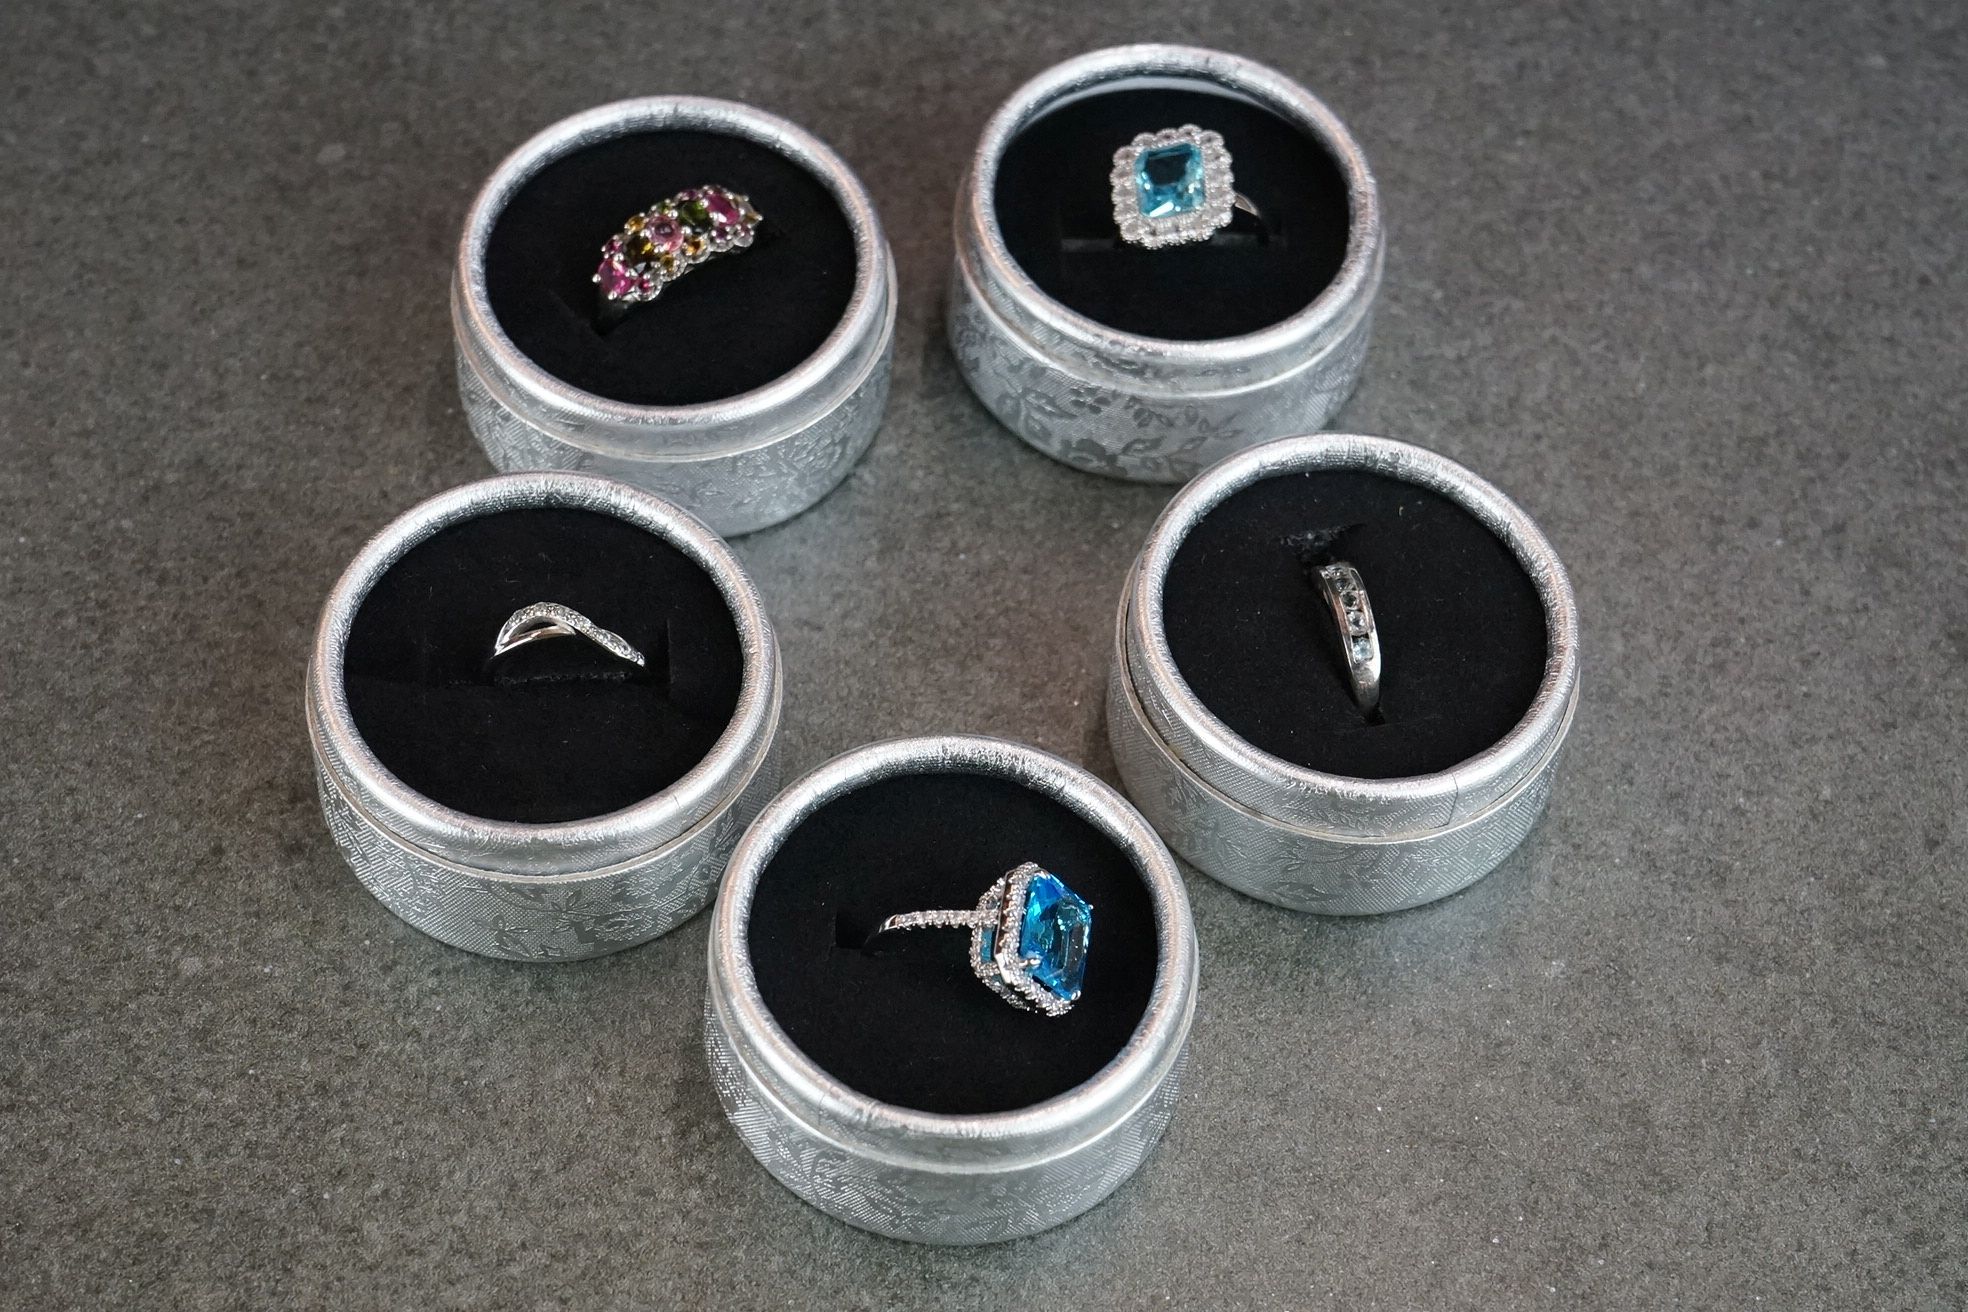 Five silver dress rings